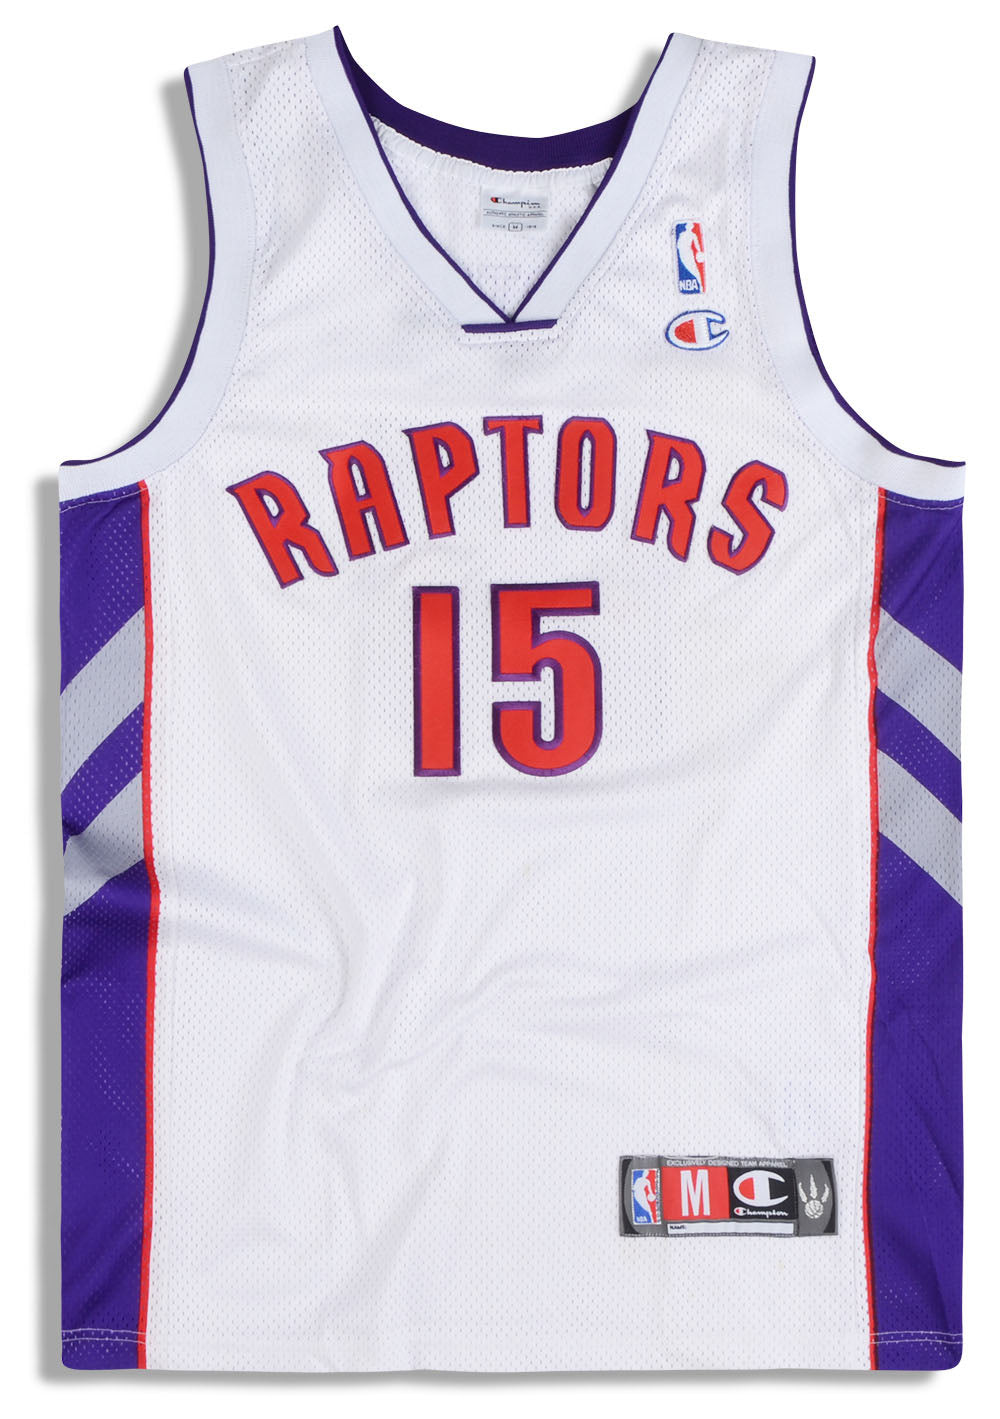 All-Star Toronto Raptors #2 NBA Jersey,Toronto Raptors